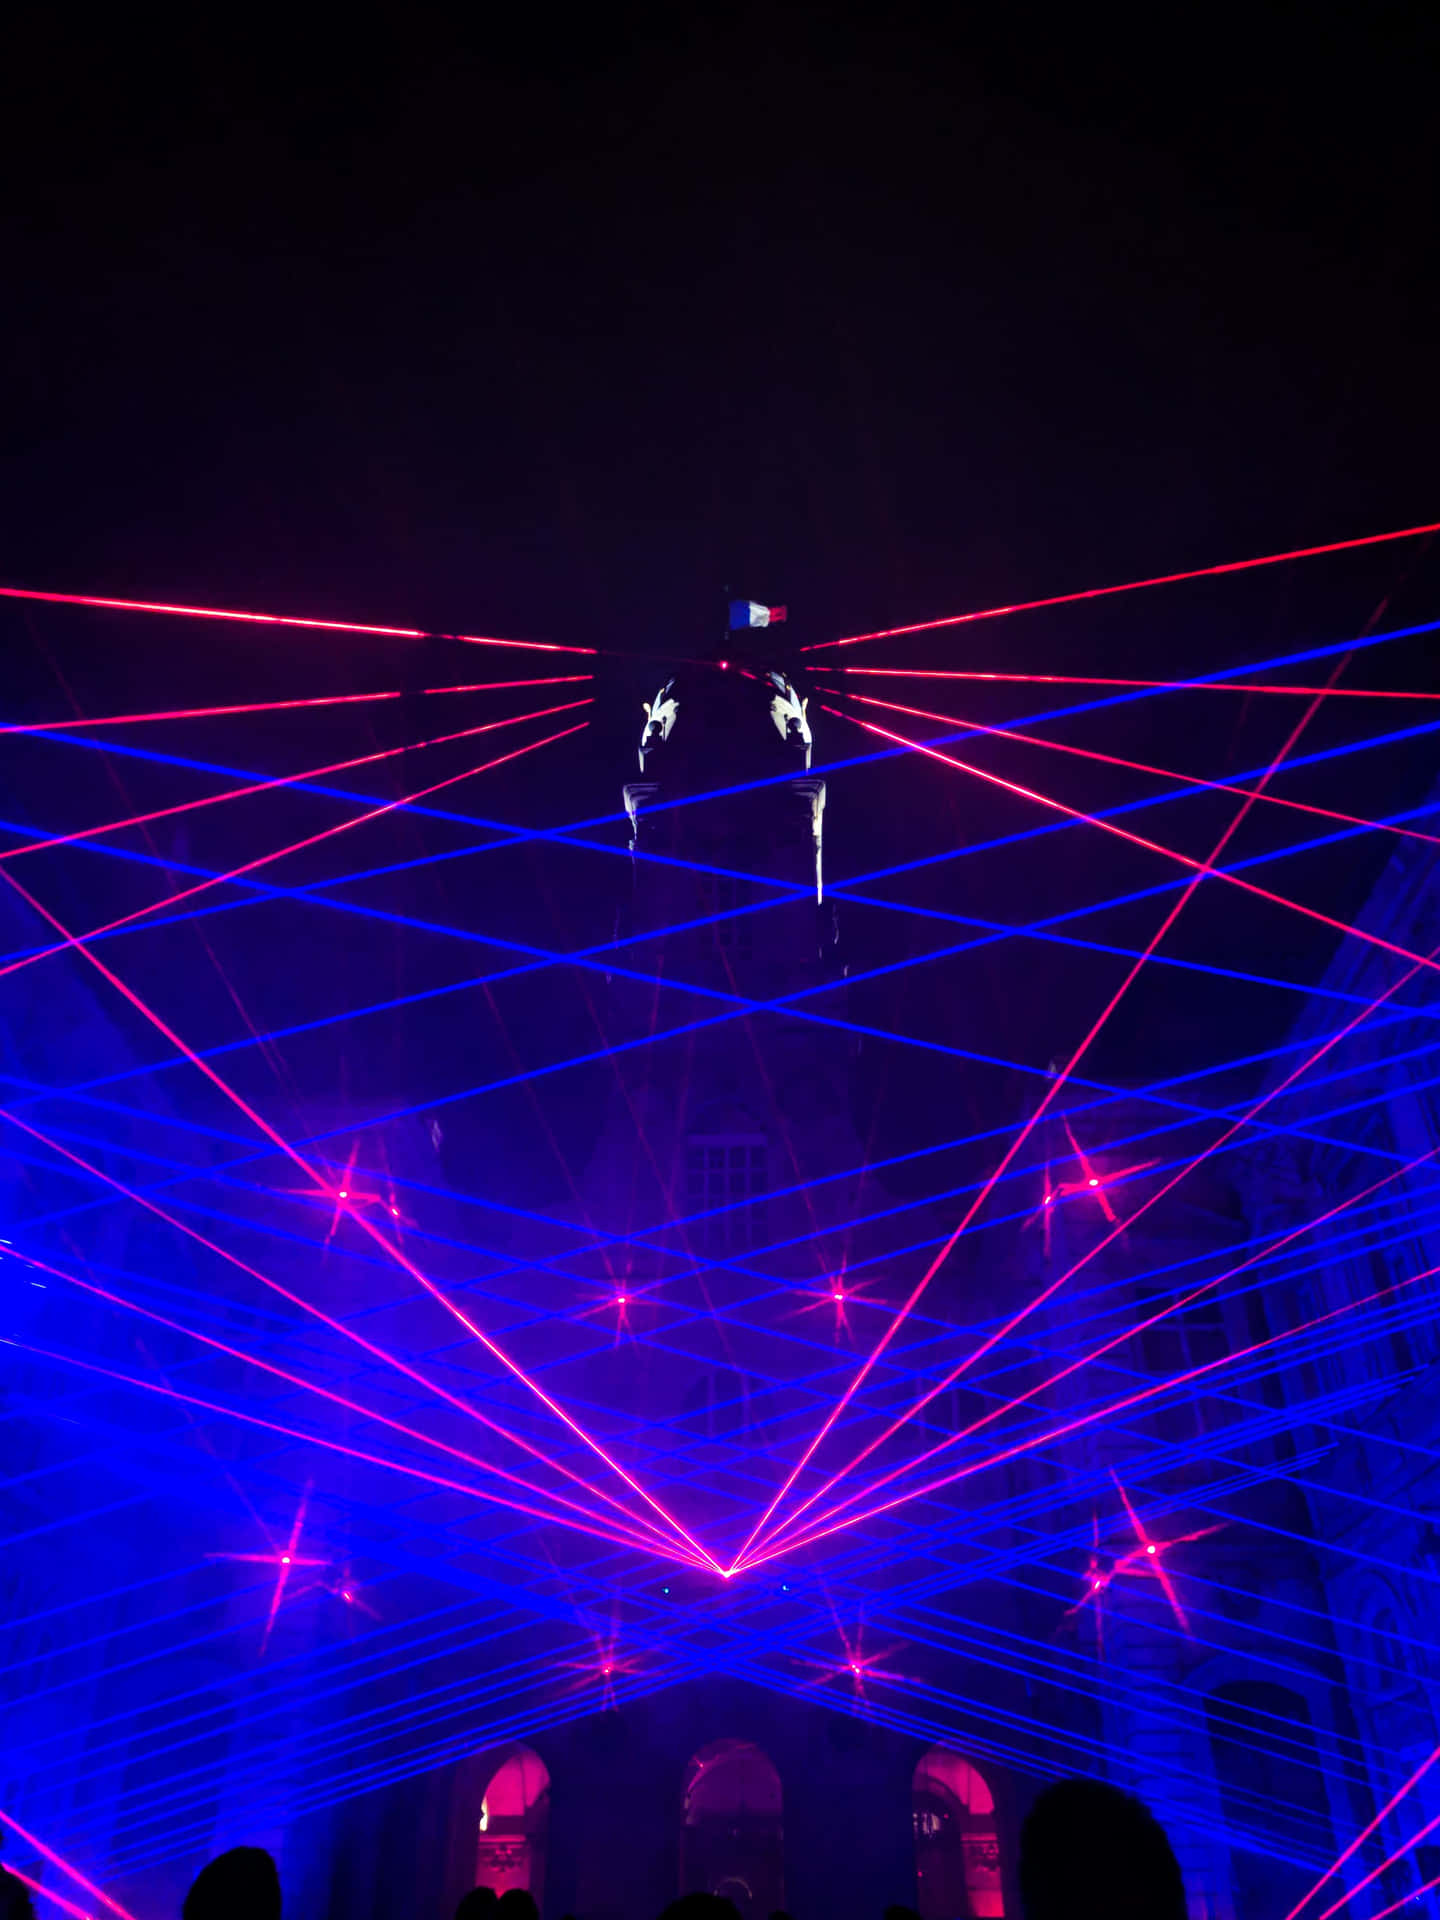 Laser light scintillating across a vibrant background